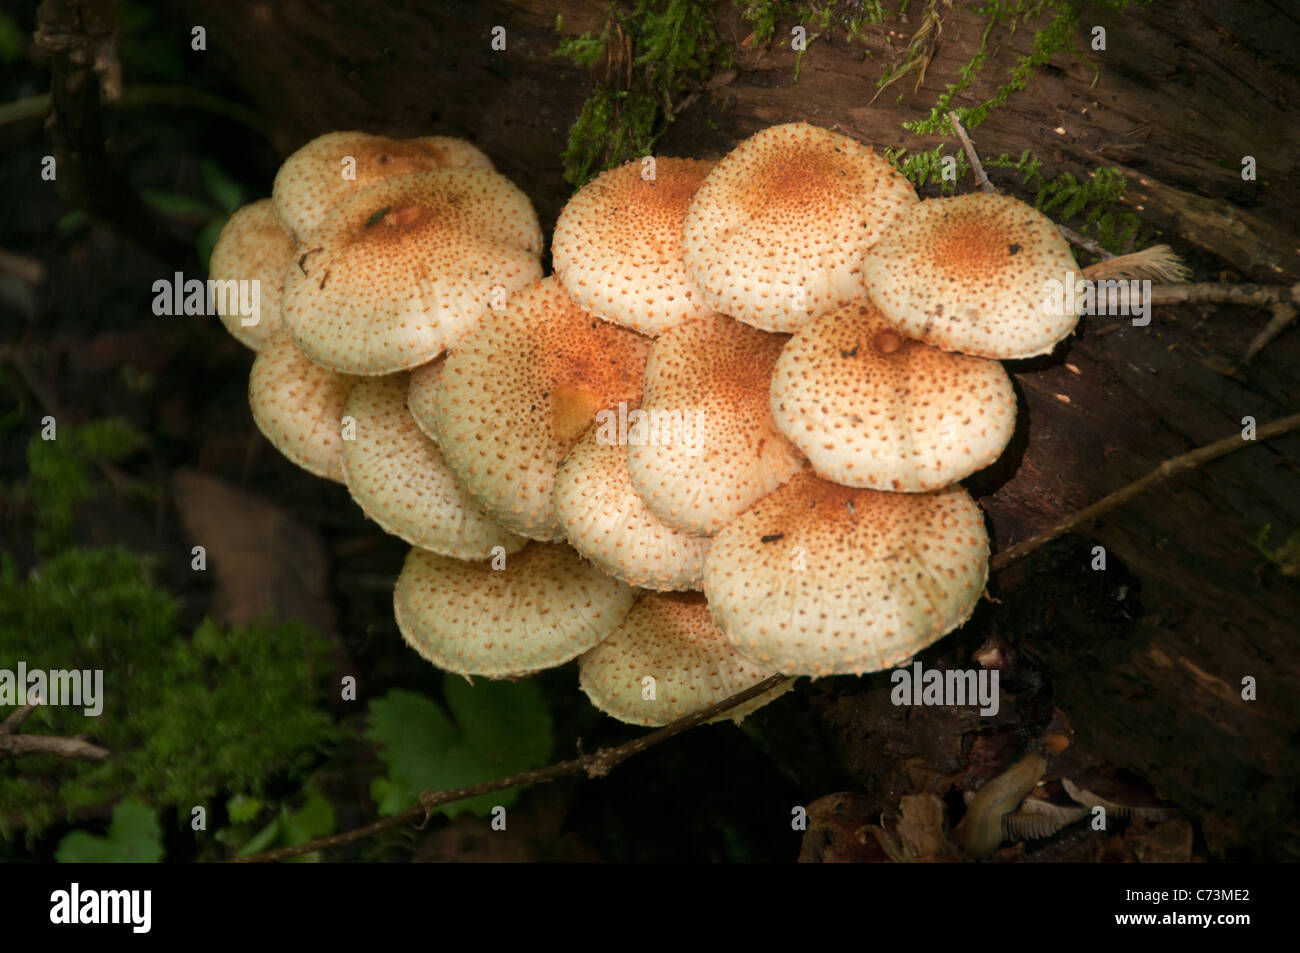 Cluster of wild mushrooms. Stock Photo